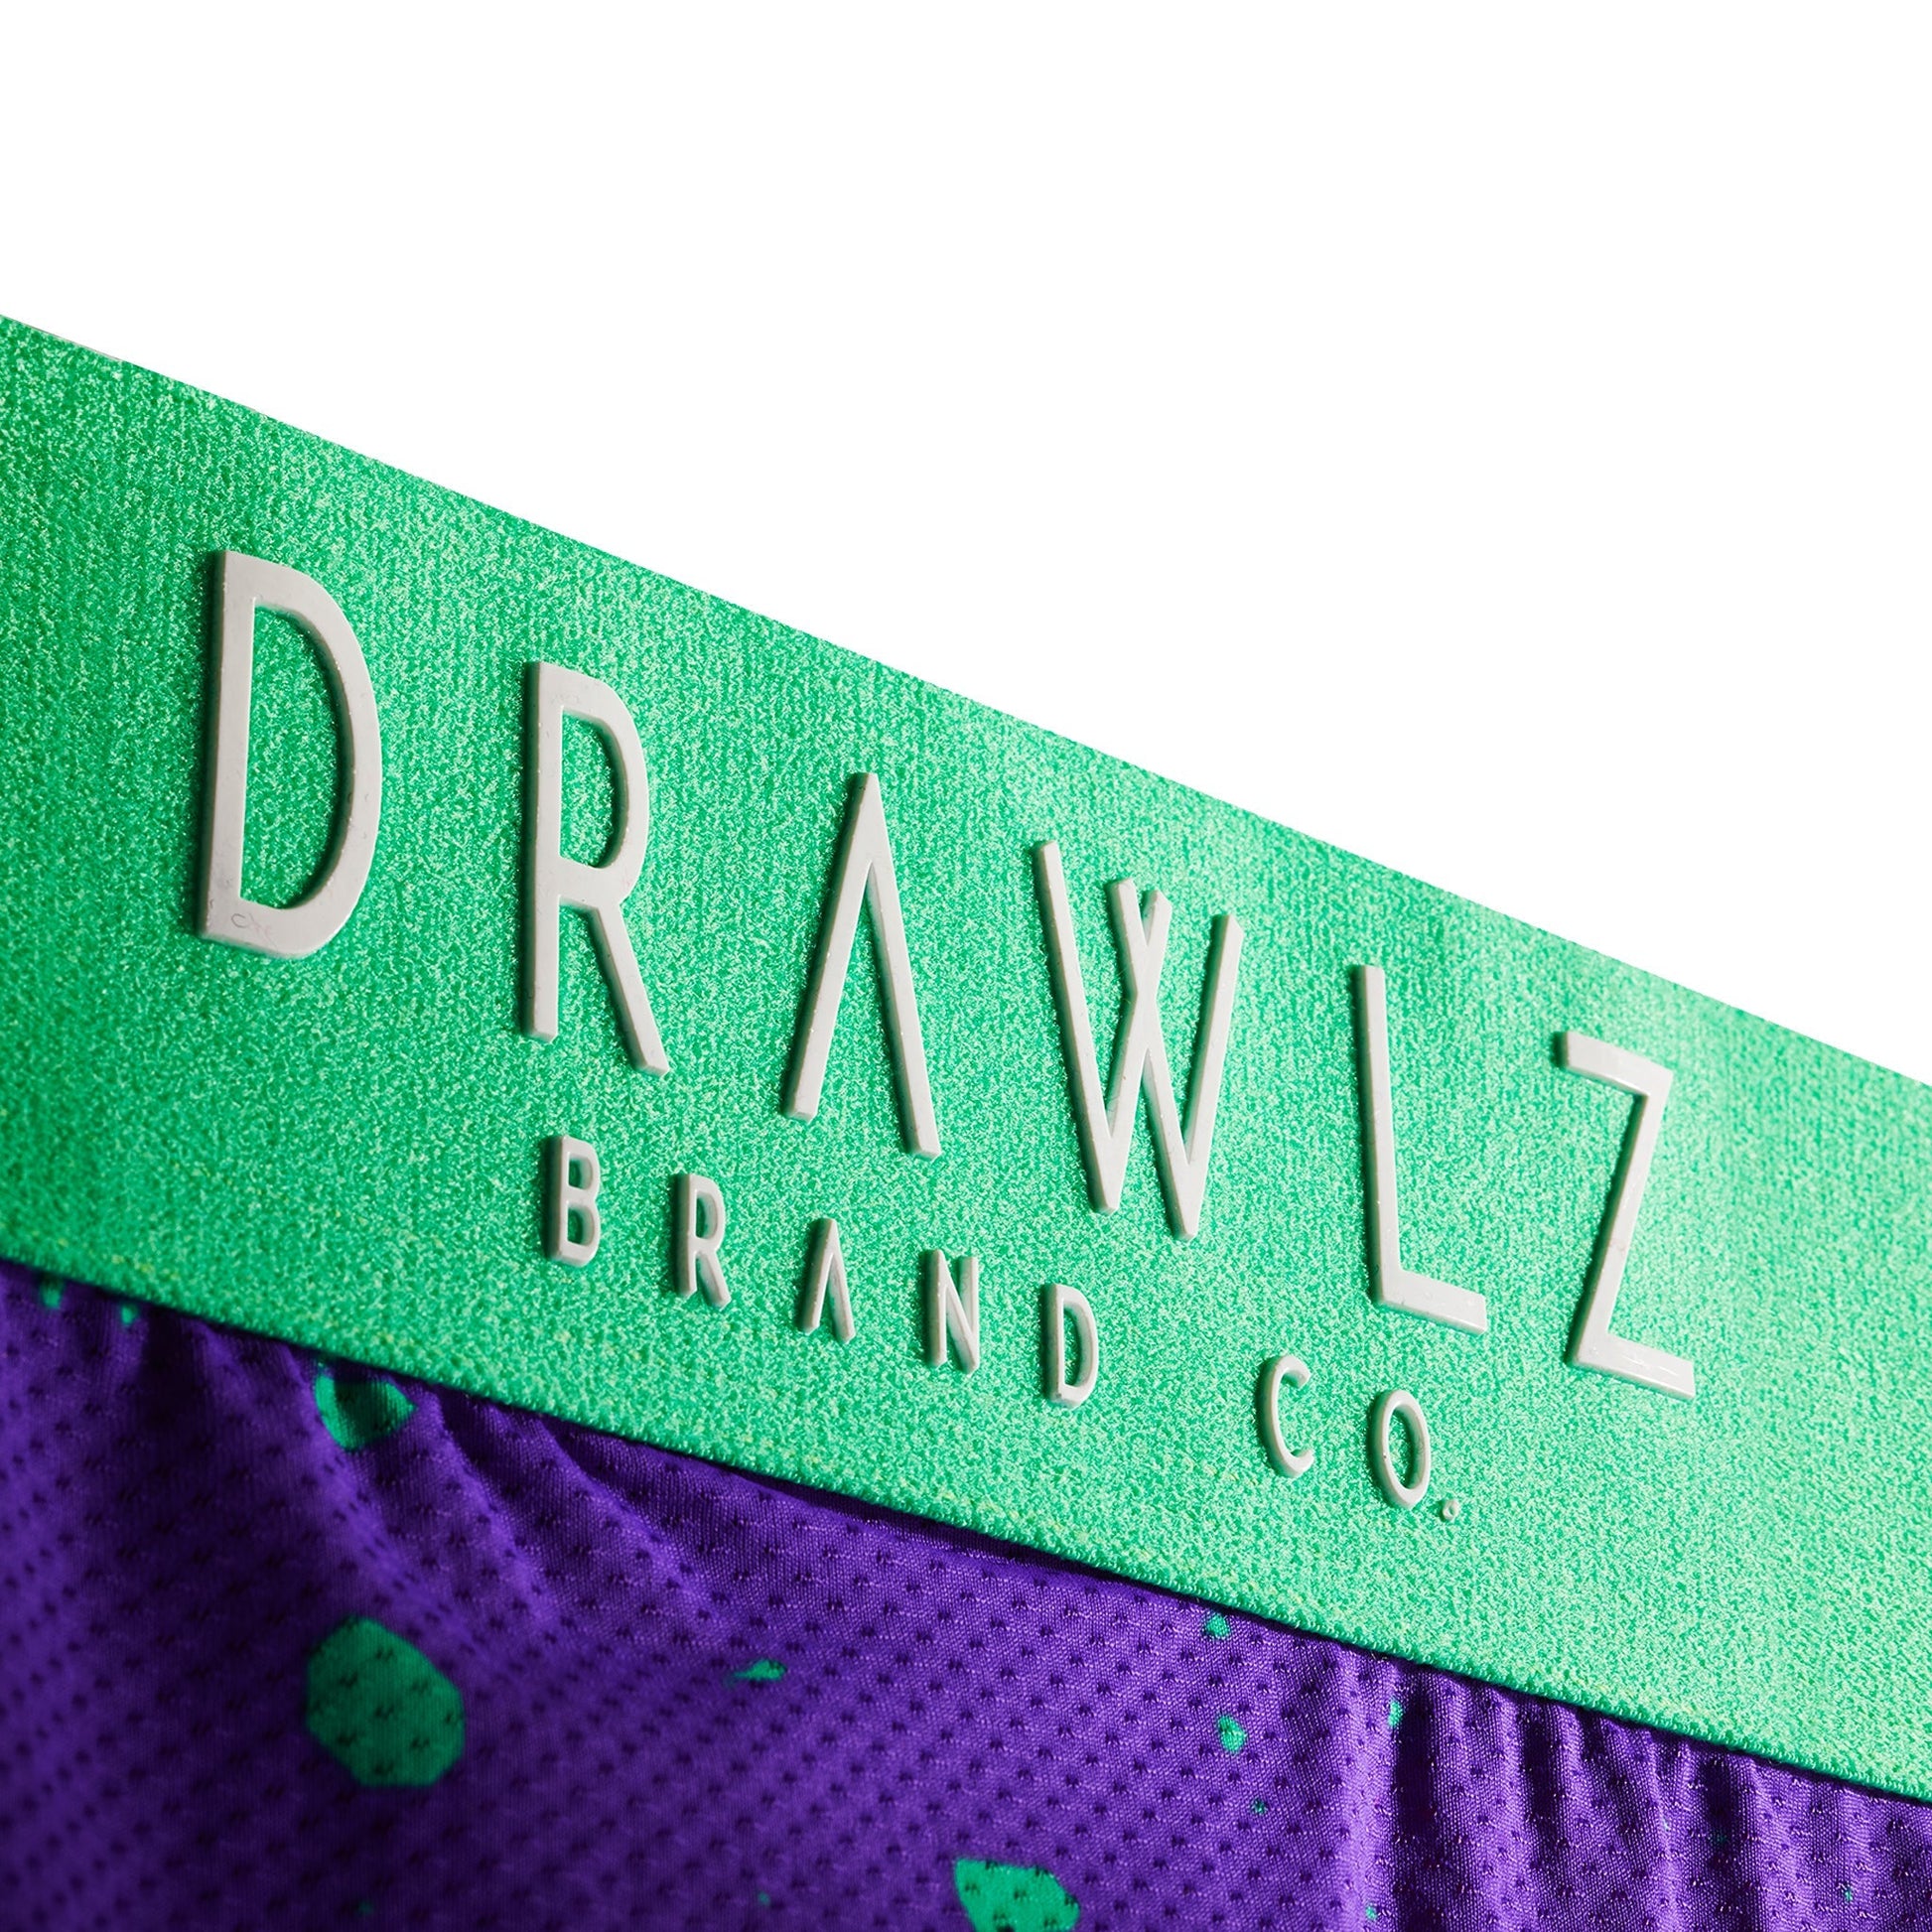 Drawlz Brand Co. , LLC Highlightz Pack